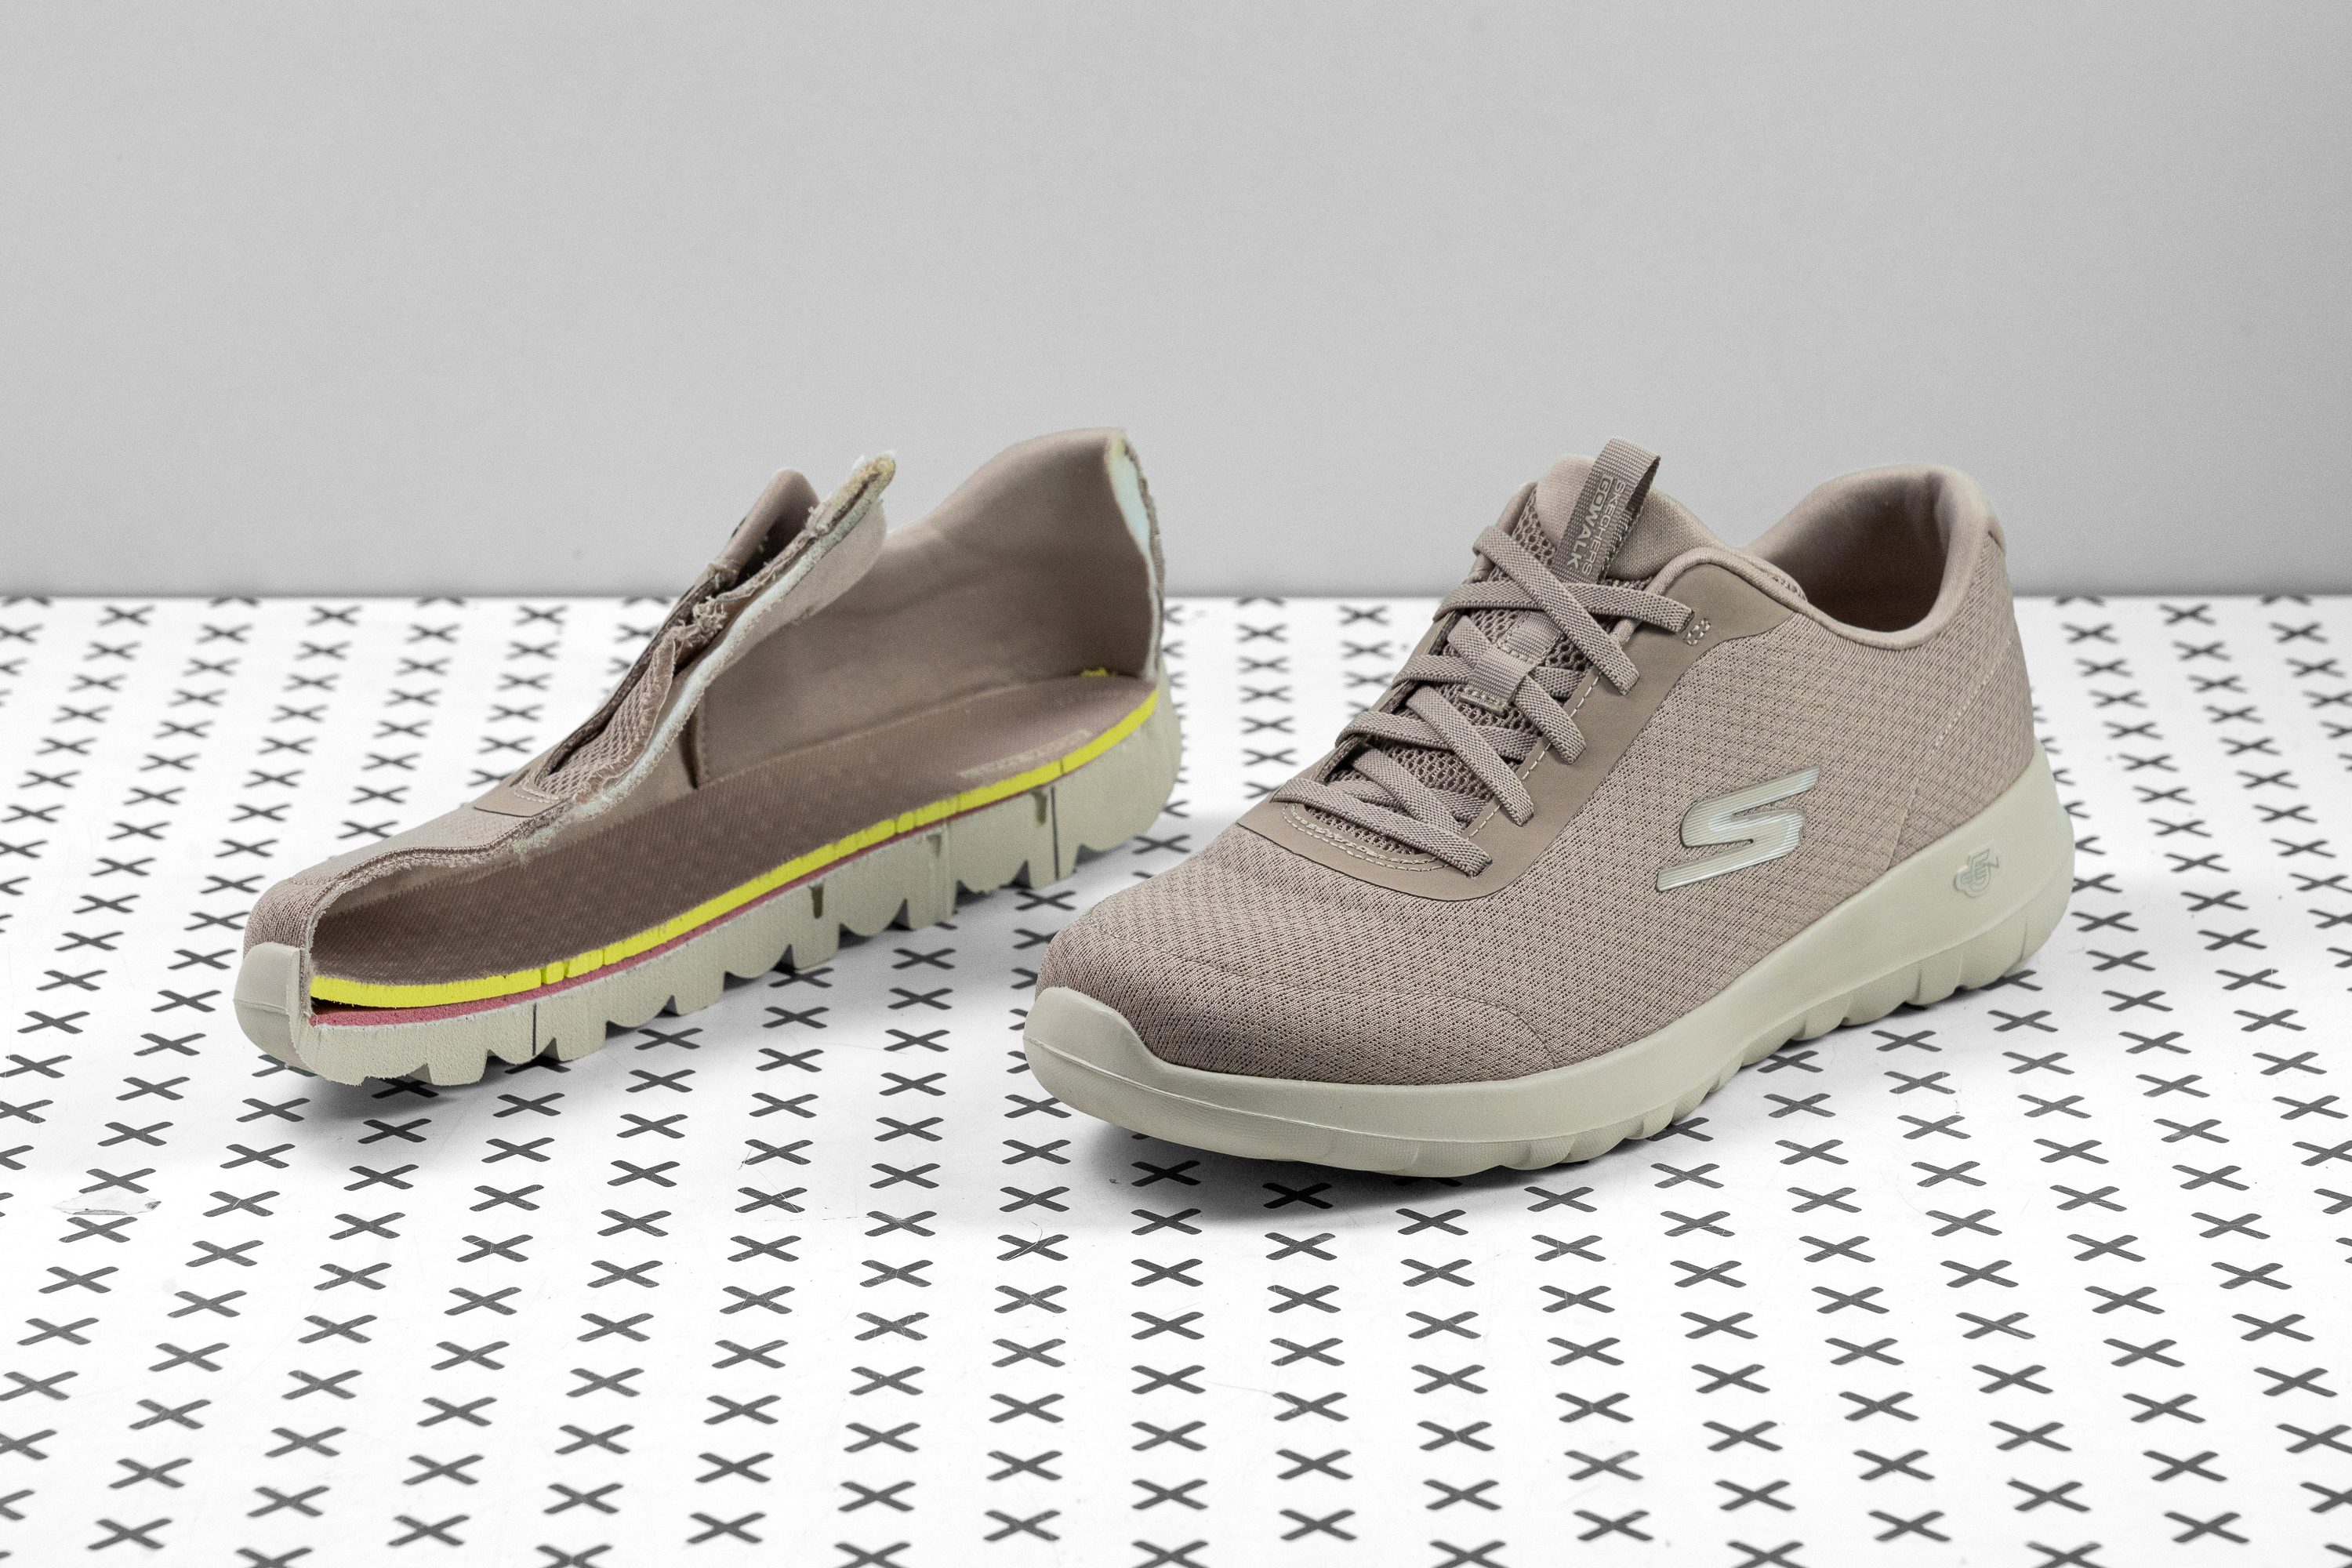 Skechers Go Walk Travel Slip-On Sneaker - Women's - Free Shipping